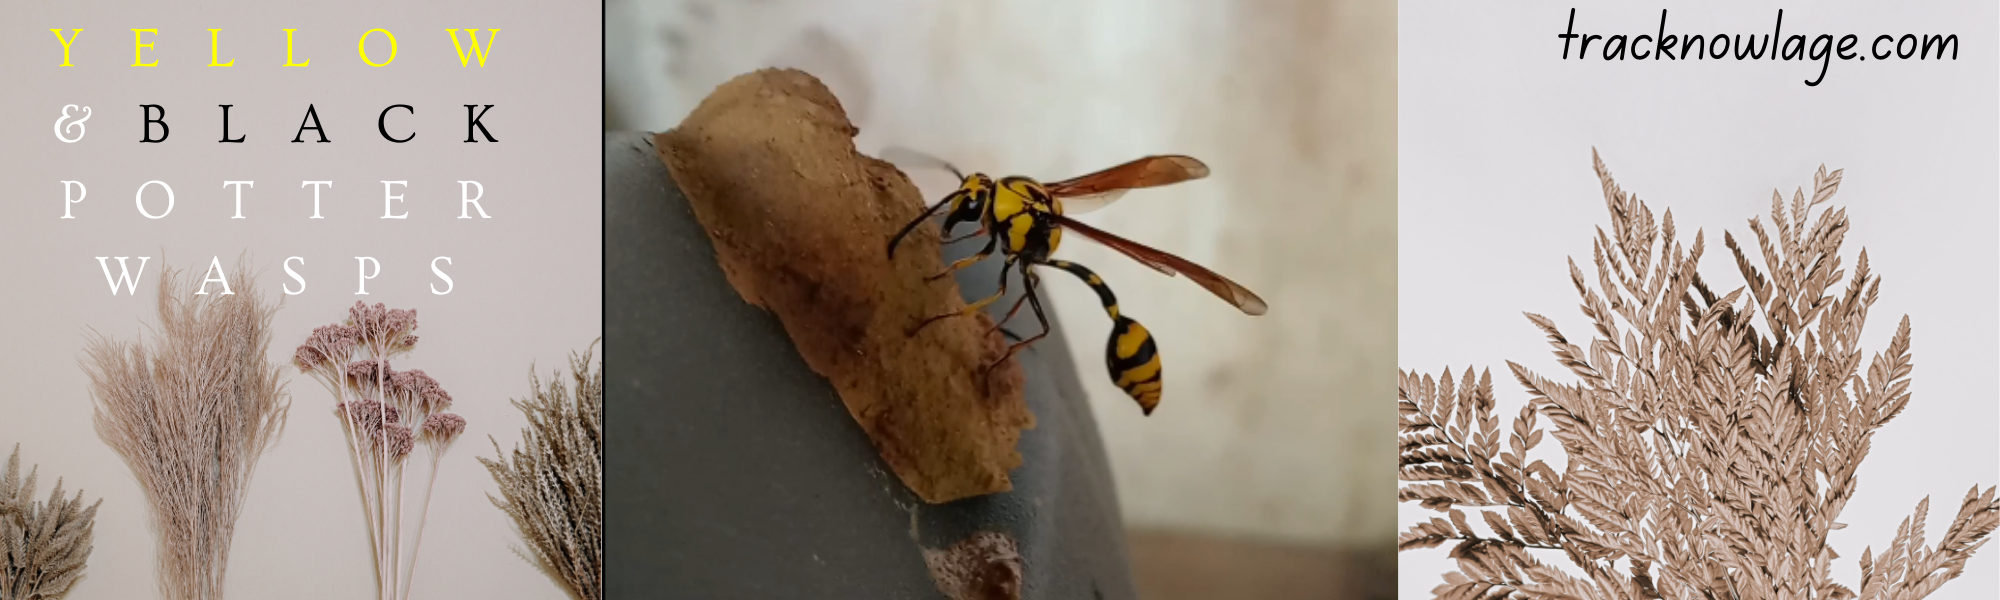 Identifying Yellow and Black Potter Wasps: Behavior, Habitat, and Nests